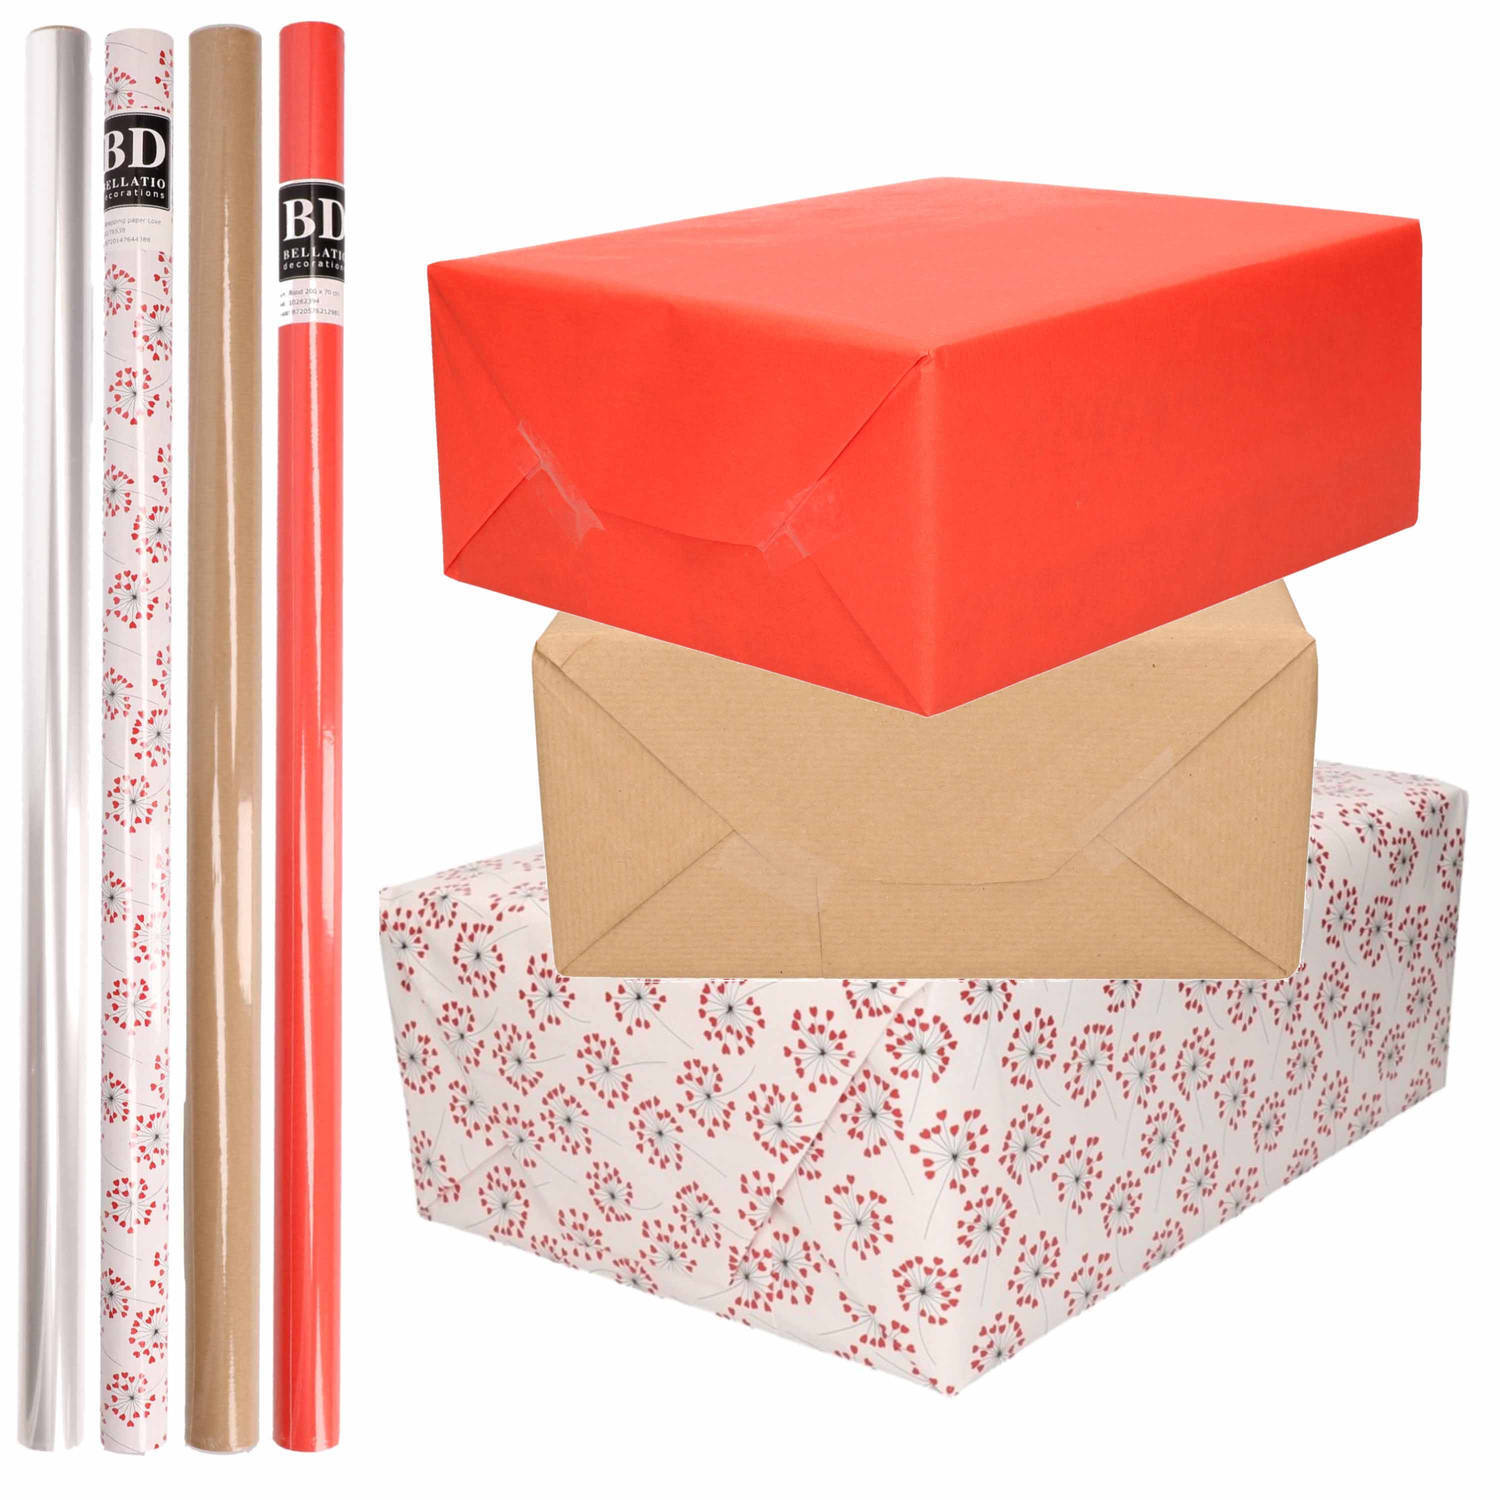 Bellatio Decorations 8x Rollen transparant folie/inpakpapier pakket - rood/bruin/wit met hartjes 200 x 70 cm - cadeau/kaften/verzendpapier/cellofaan